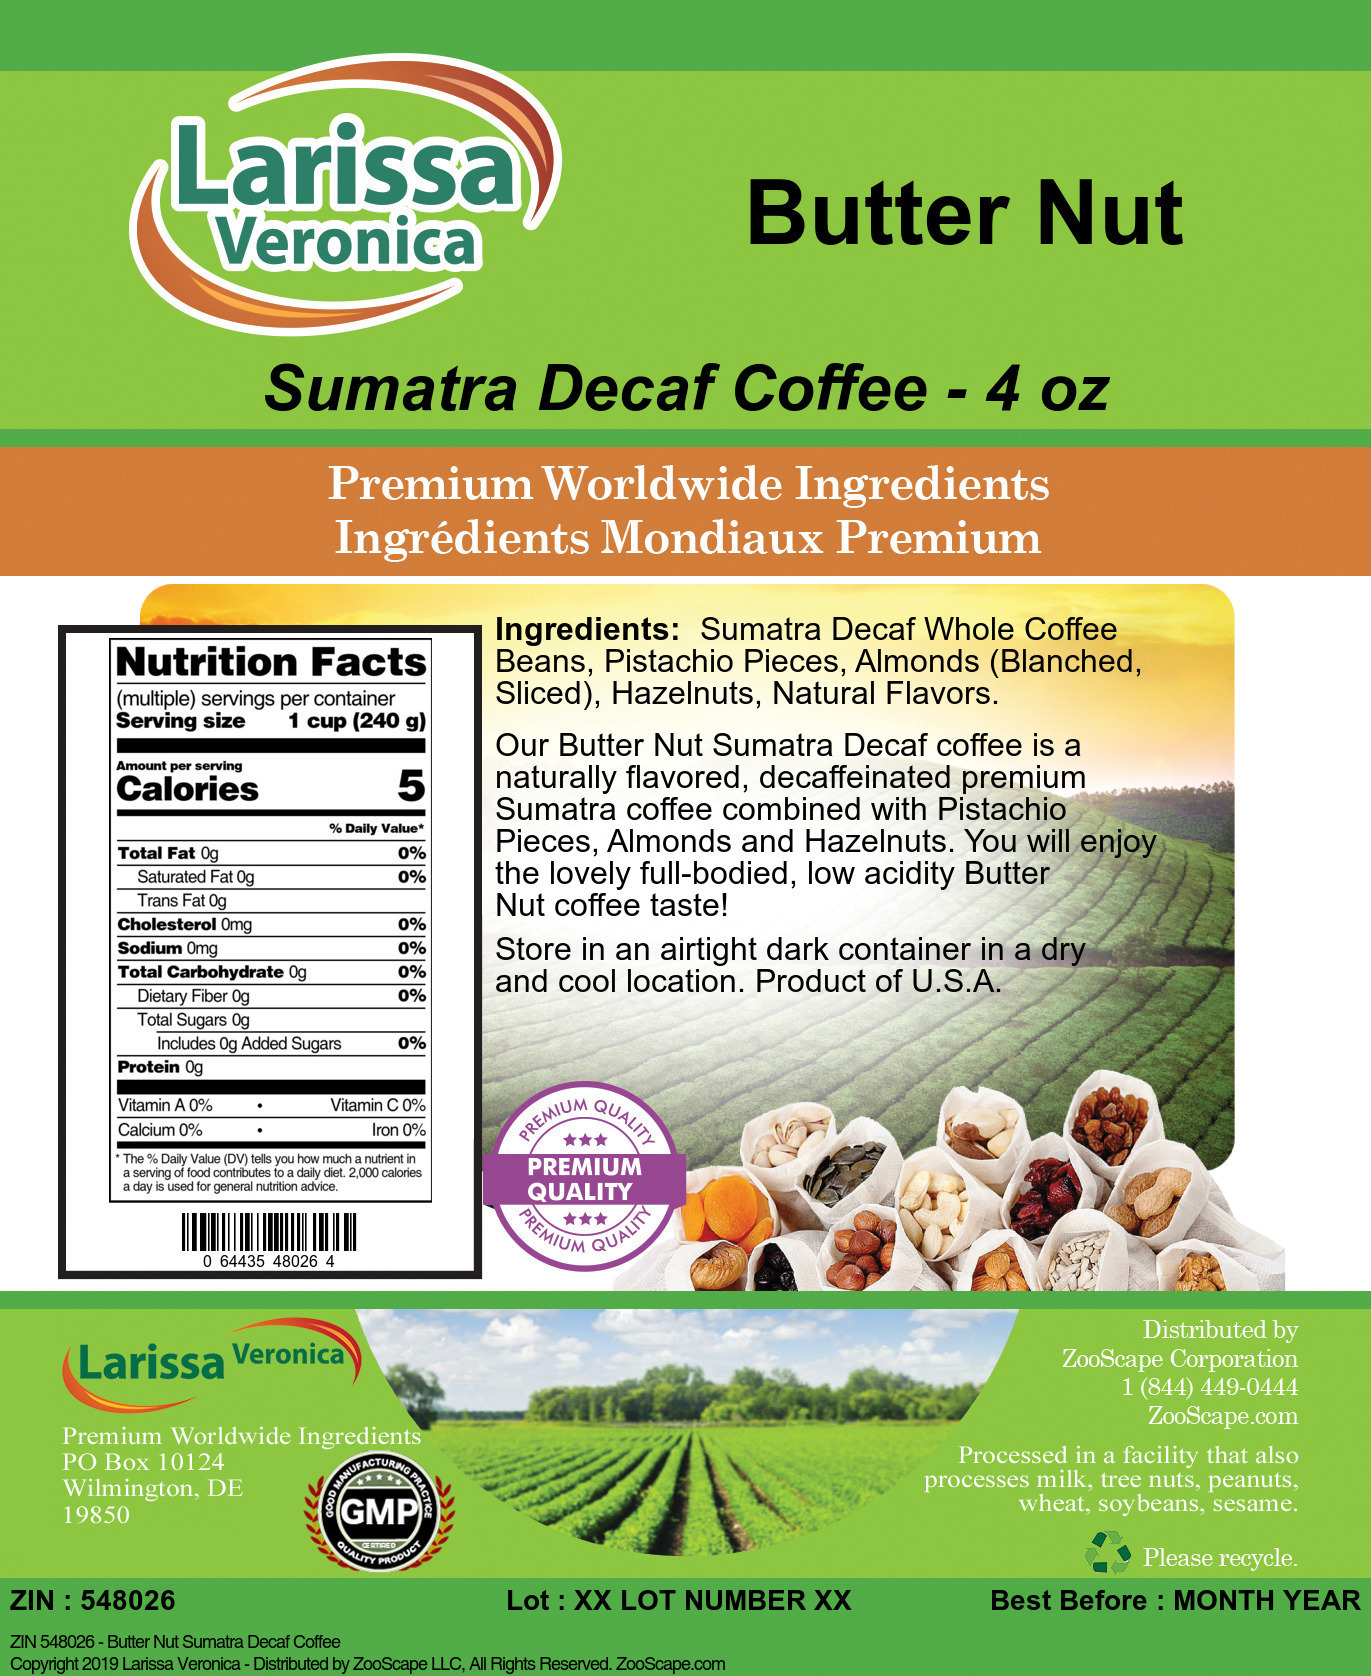 Butter Nut Sumatra Decaf Coffee - Label